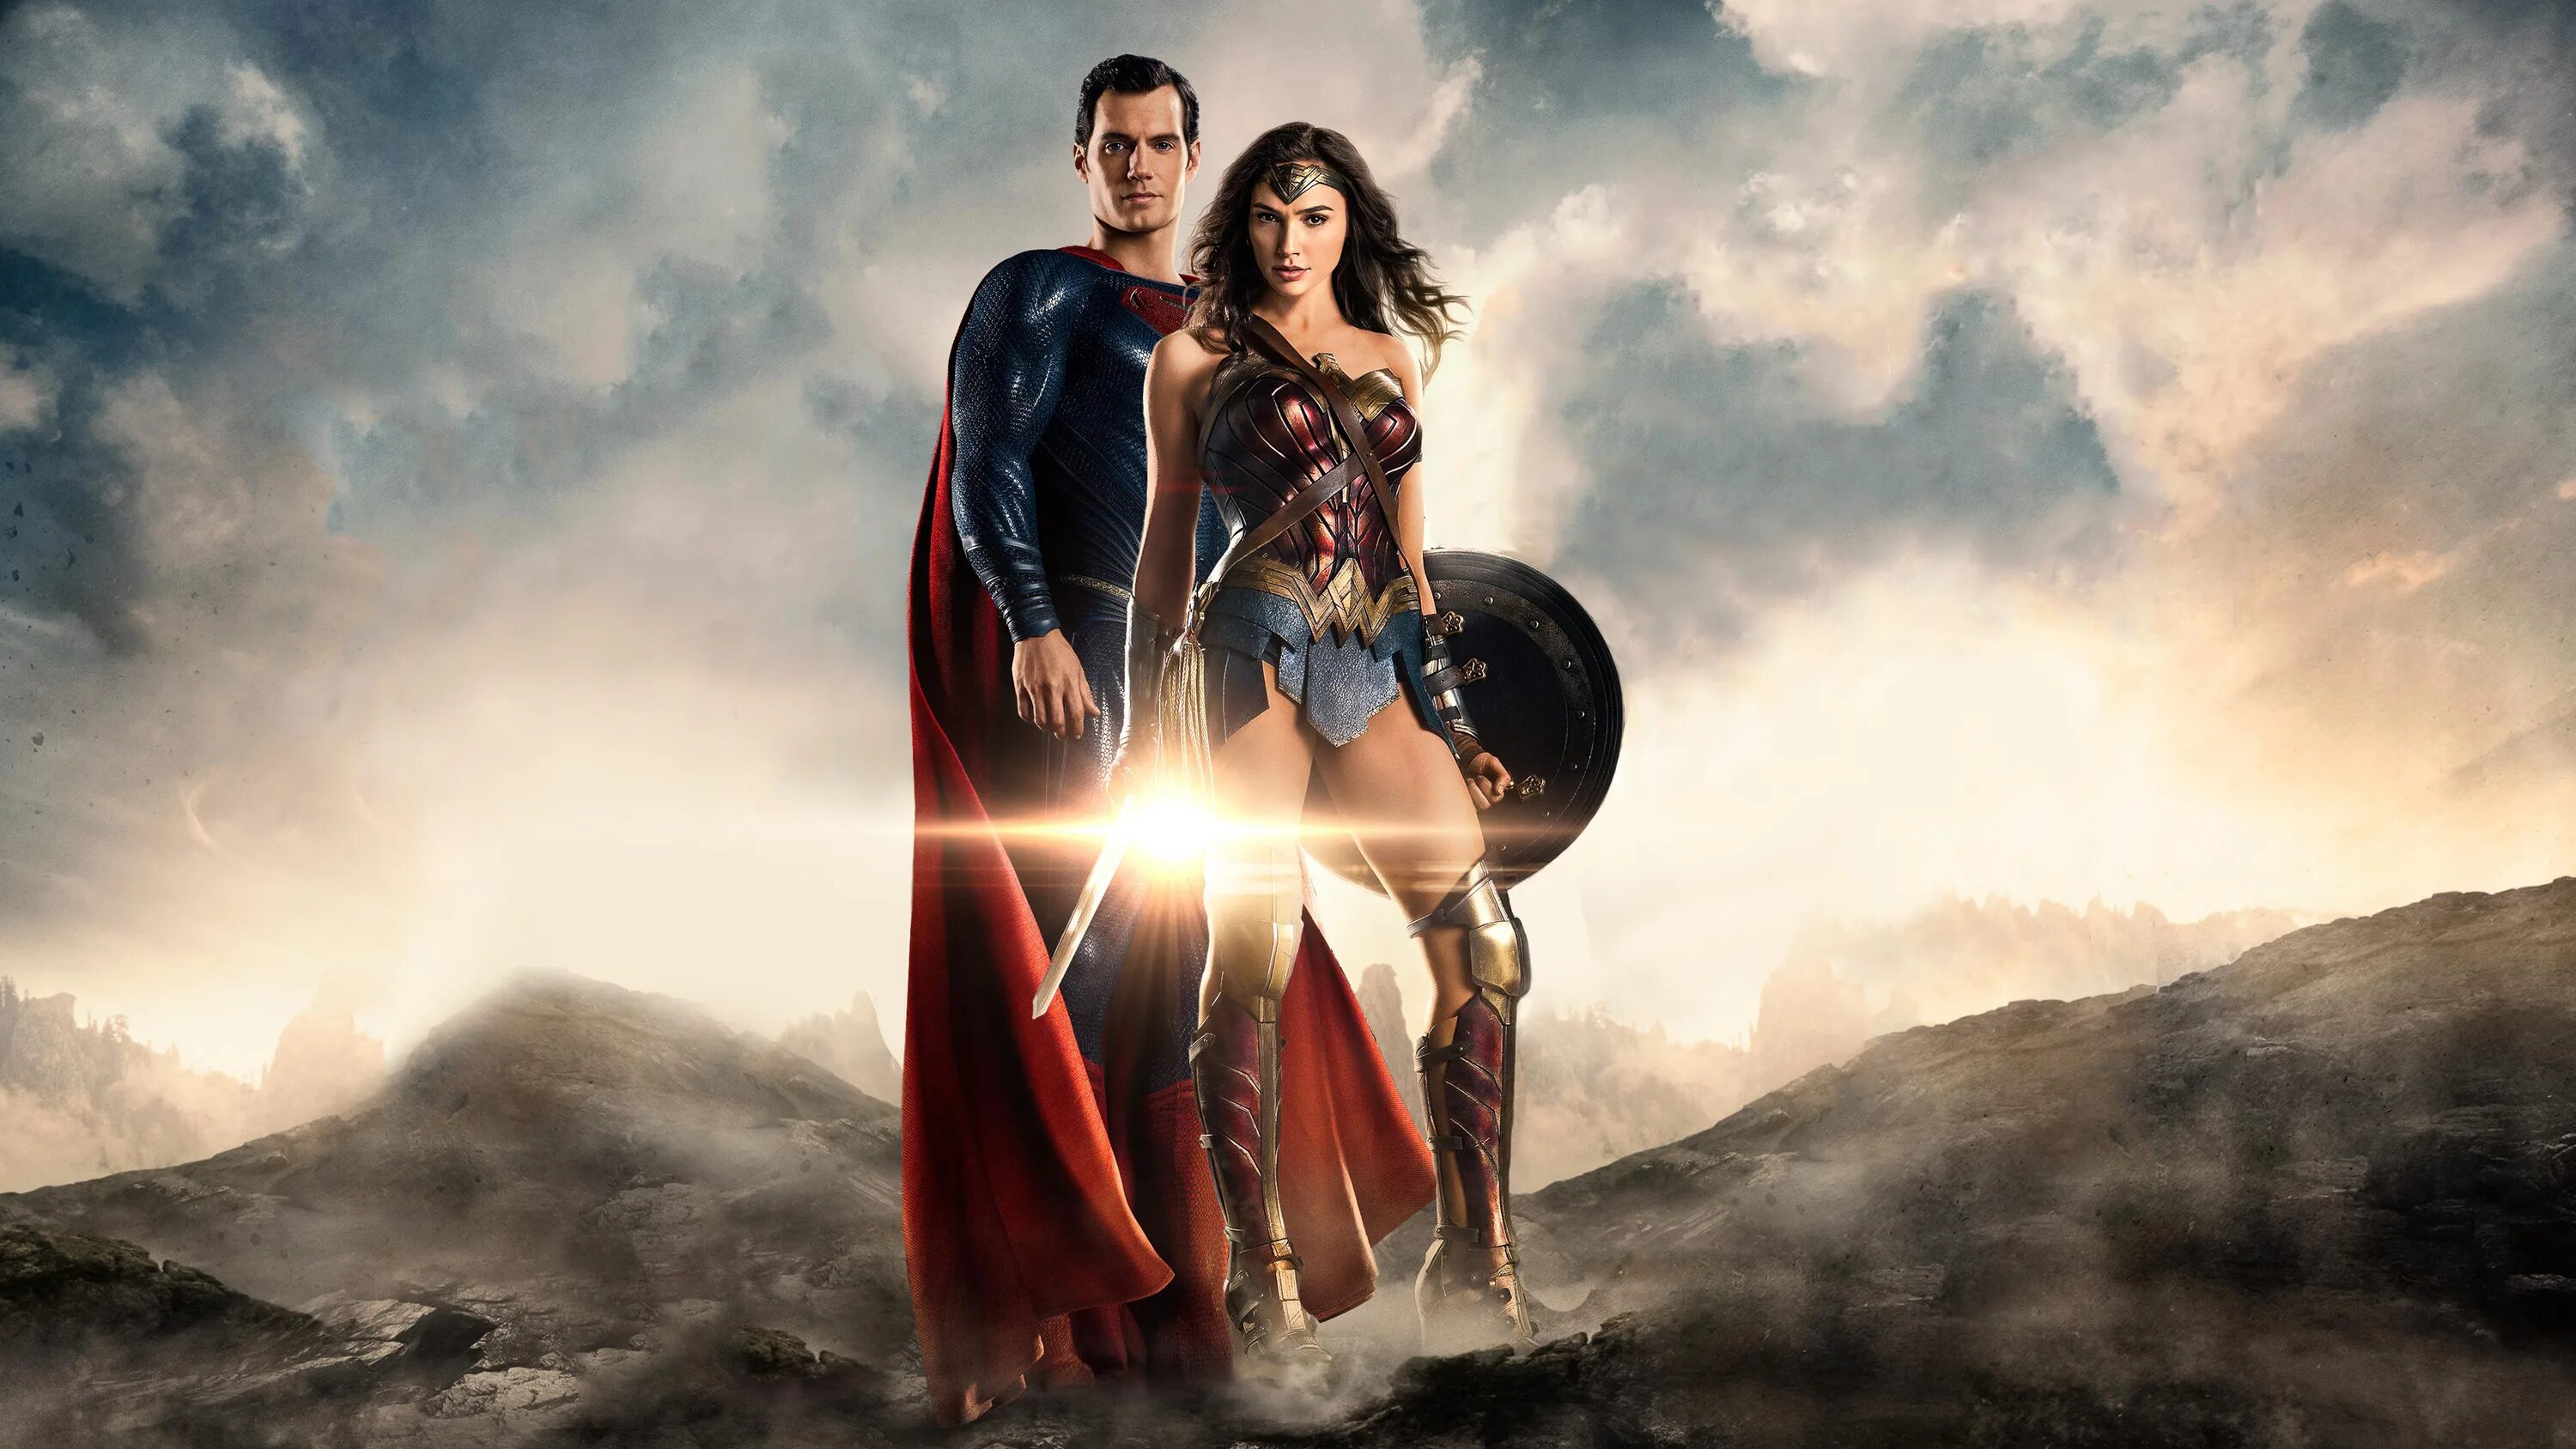 Justice league x. Лига справедливости (2017) Галь Гадот чудо-женщина. Супермен и чудо женщина Галя Гадон. Вандер Вумен герой.